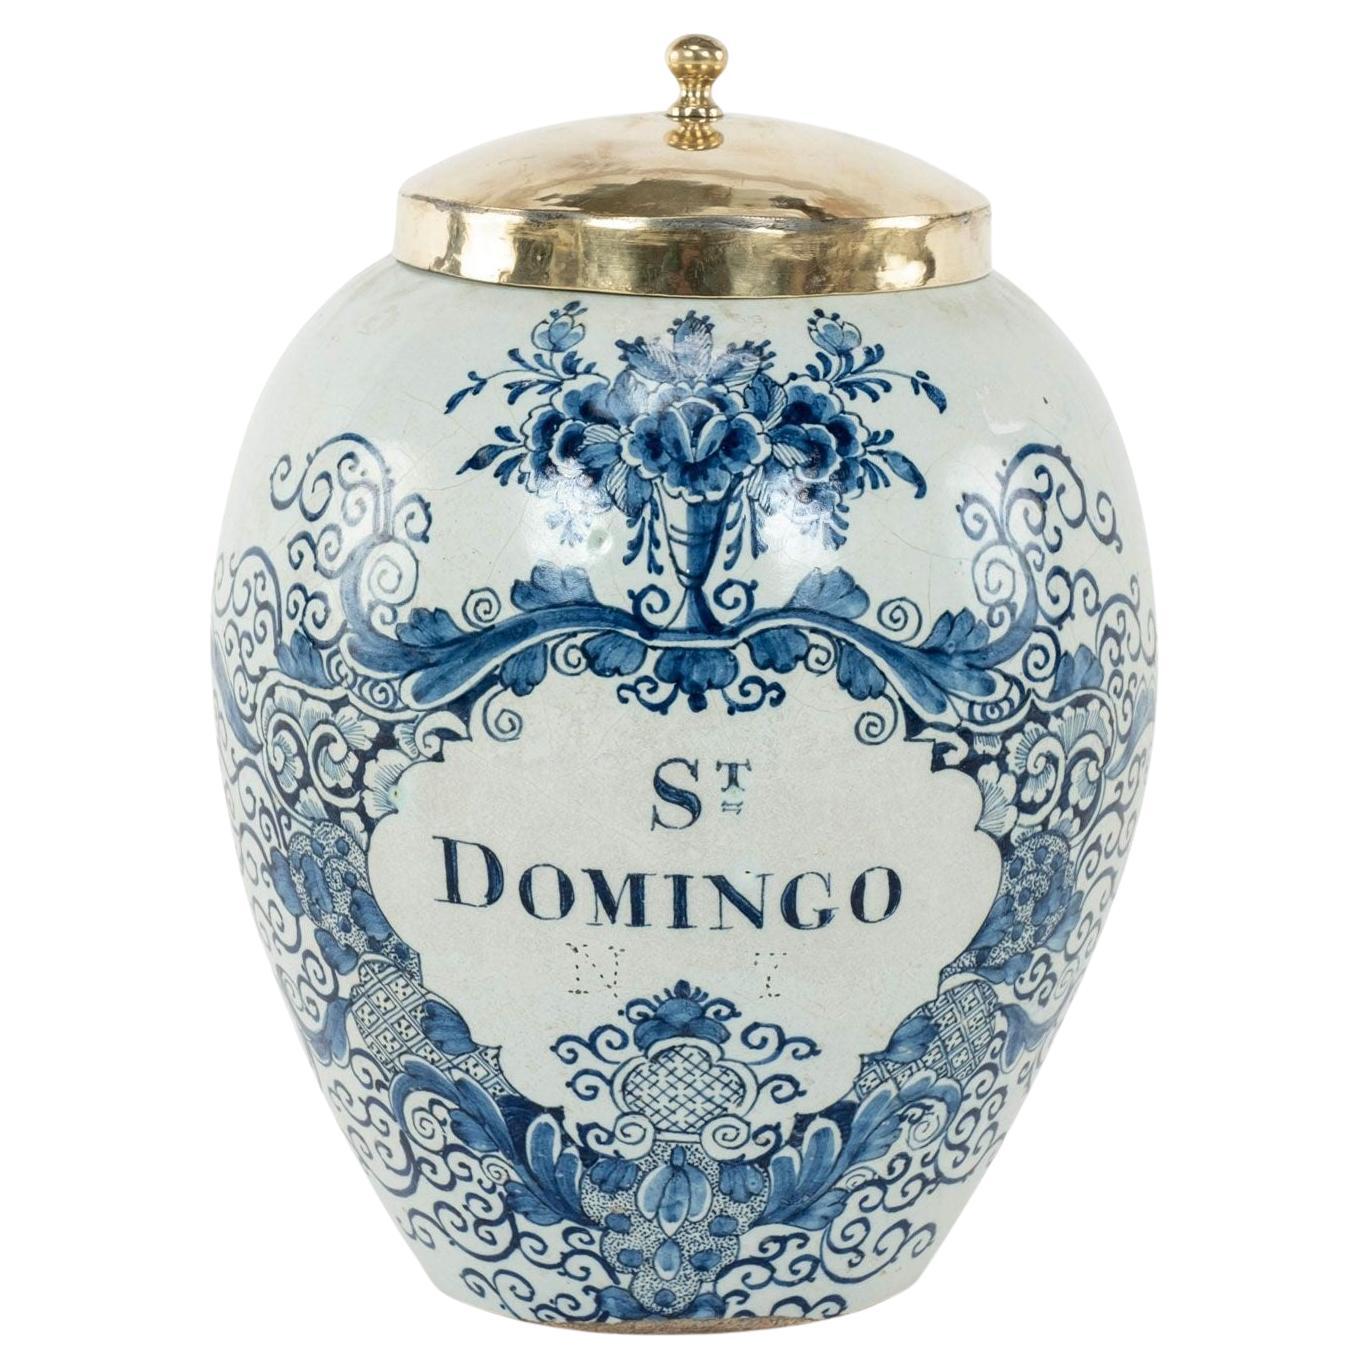 Delft Blue and White "St Domingo" Tobacco Jar For Sale